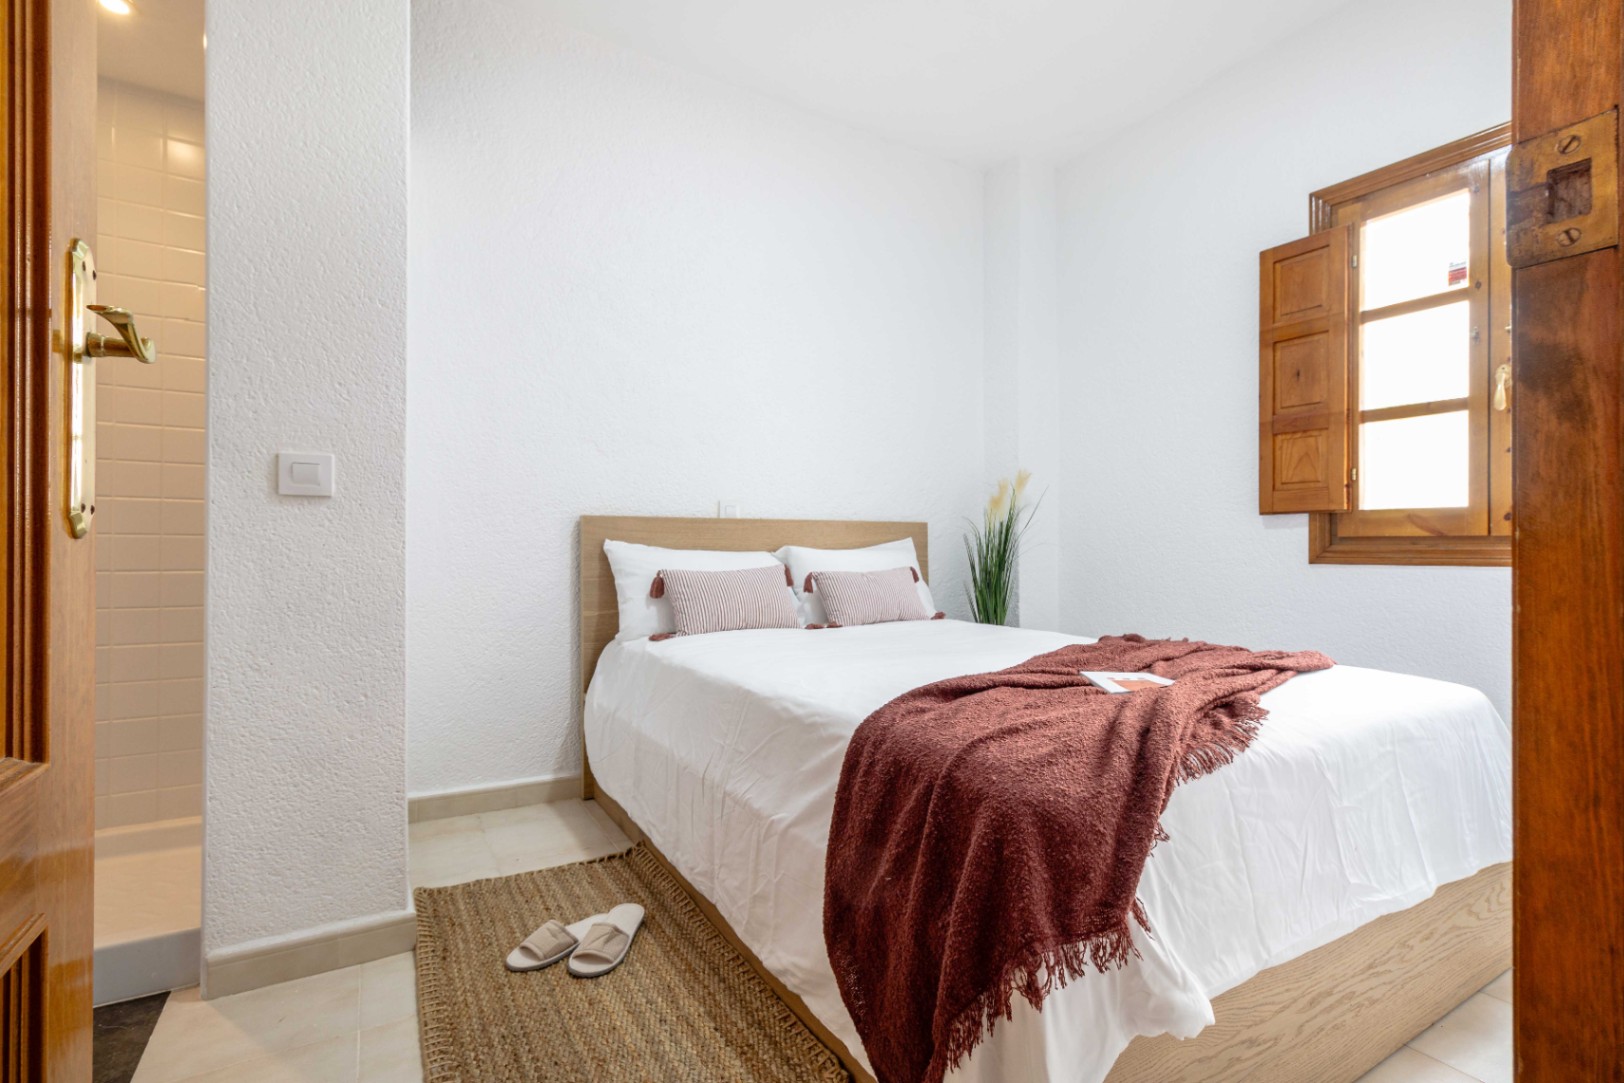 2 bedroom apartment in La Sella